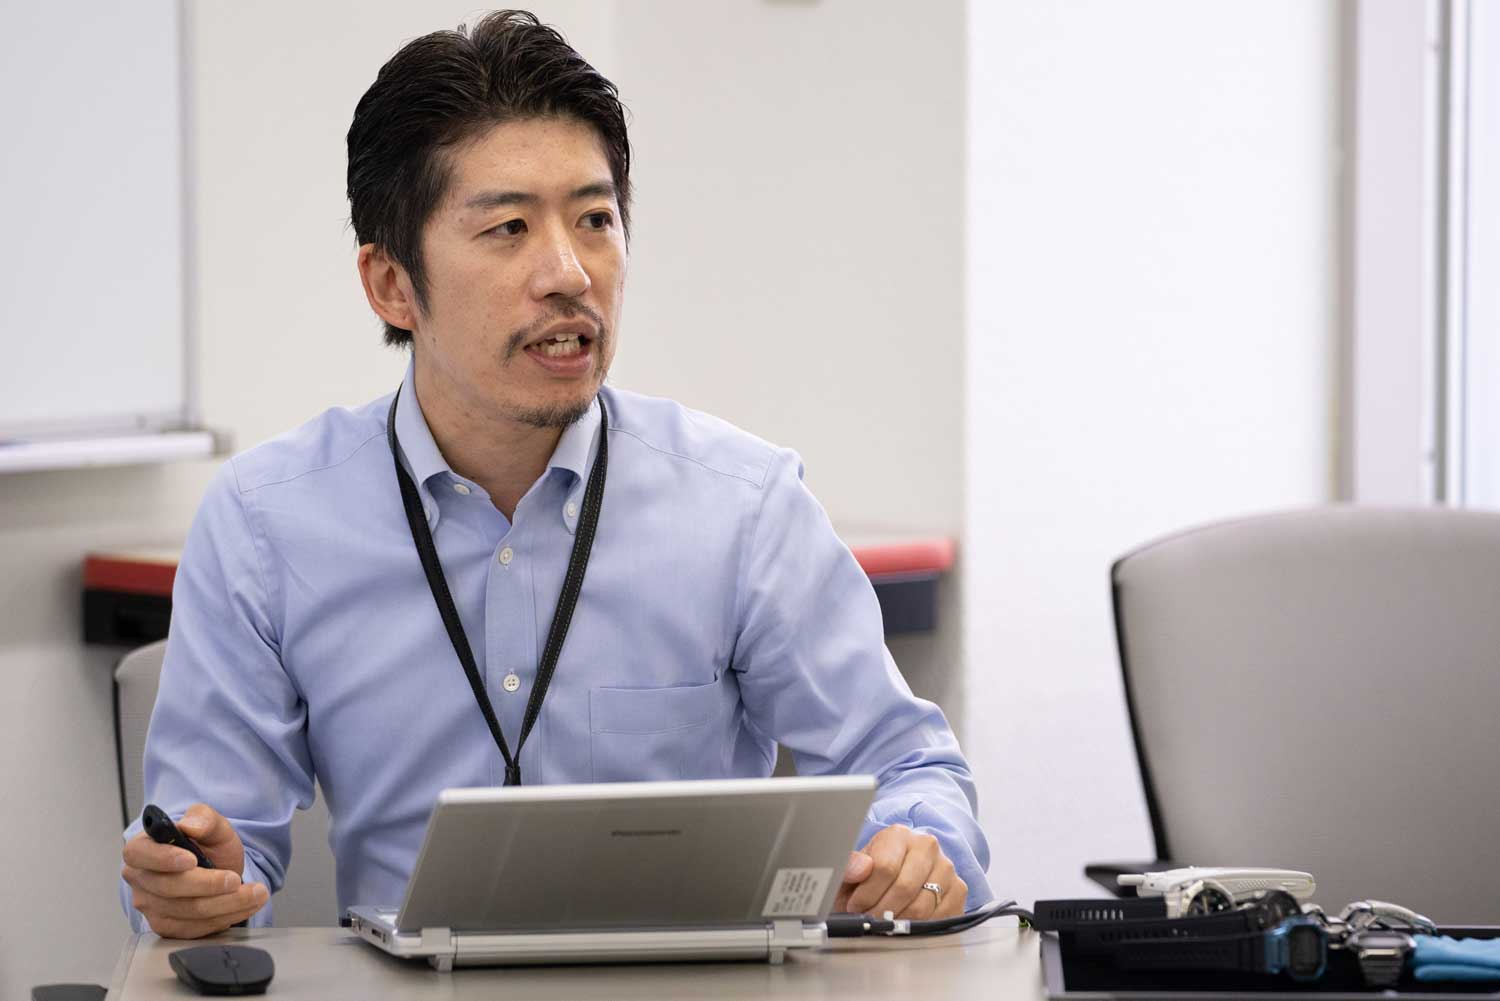 Mr Jyunichi Izumi, Project Manager at Casio’s Development Promotion Unit